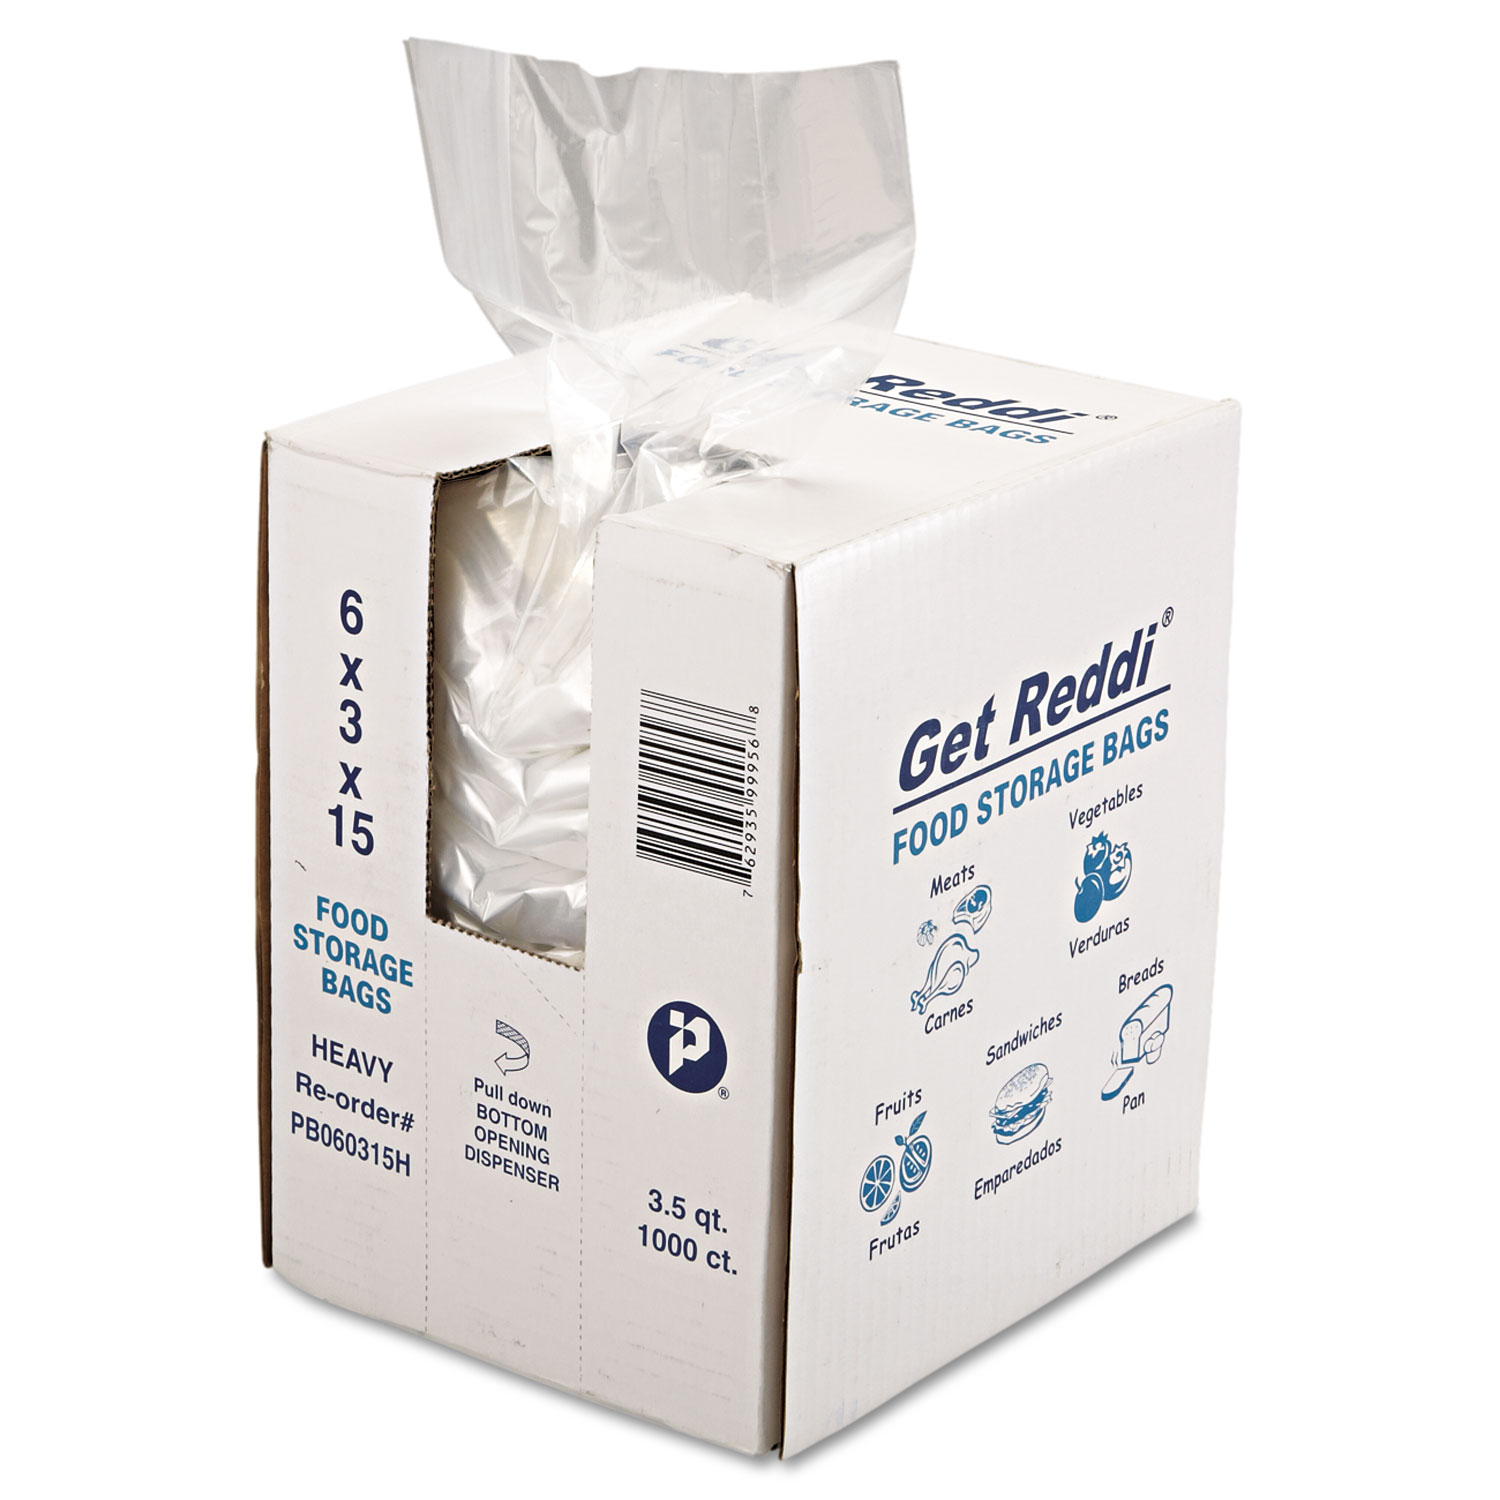 Inteplast Group PB060315 Get Reddi 6 x 3 x 15 Plastic Food Bag -  1000/Case